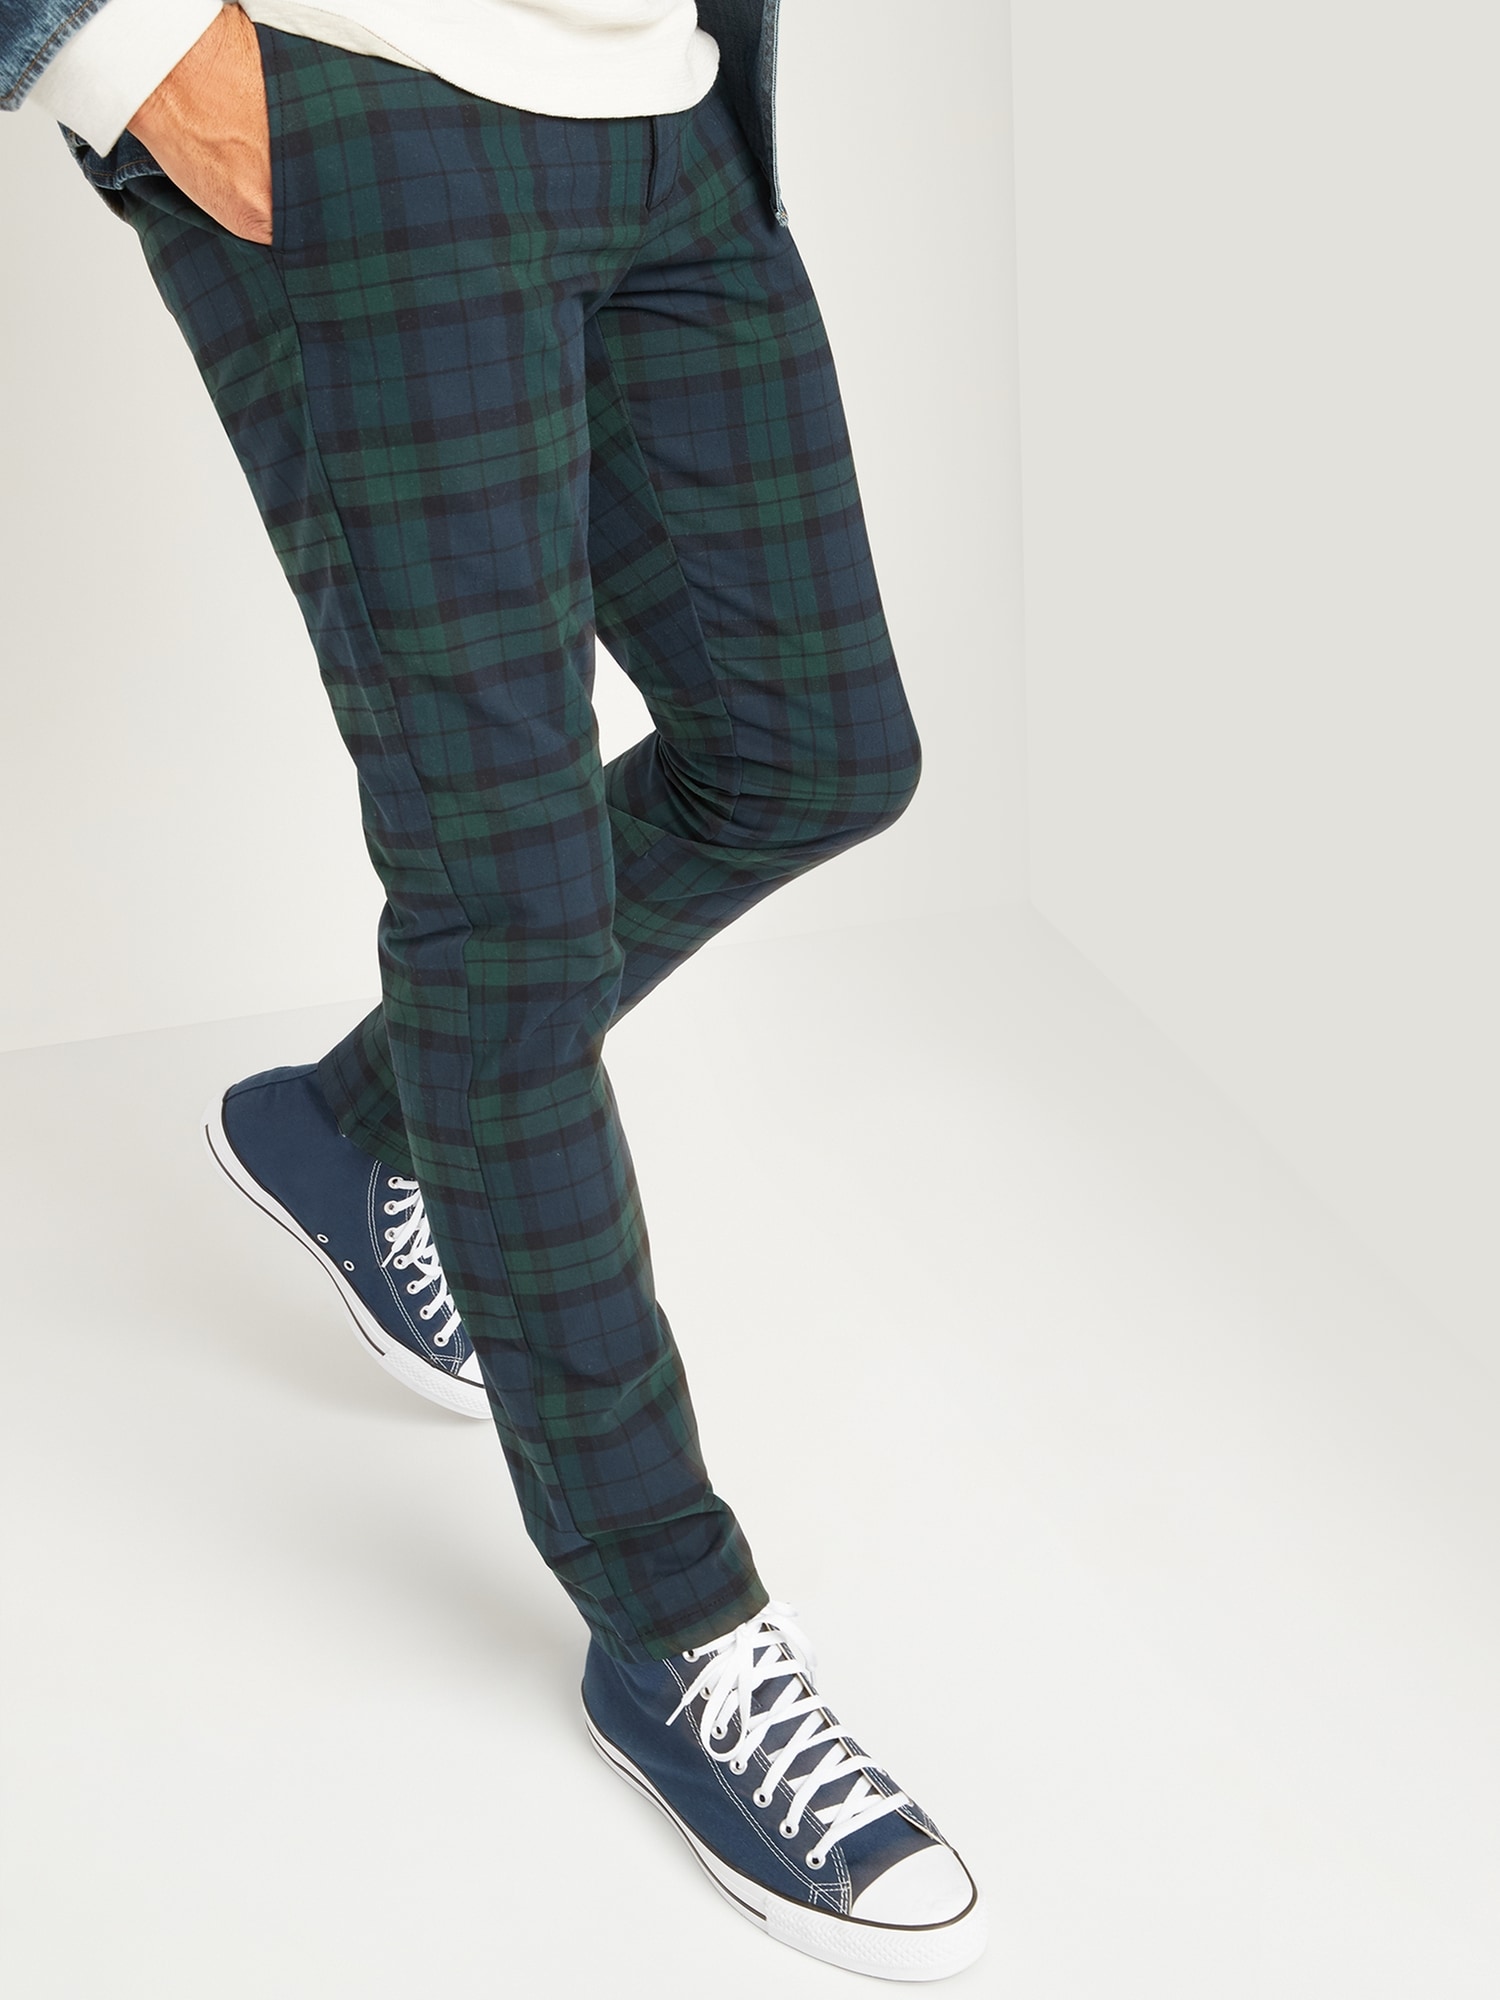 Slim Ultimate Built-In Flex Textured Chino Pants